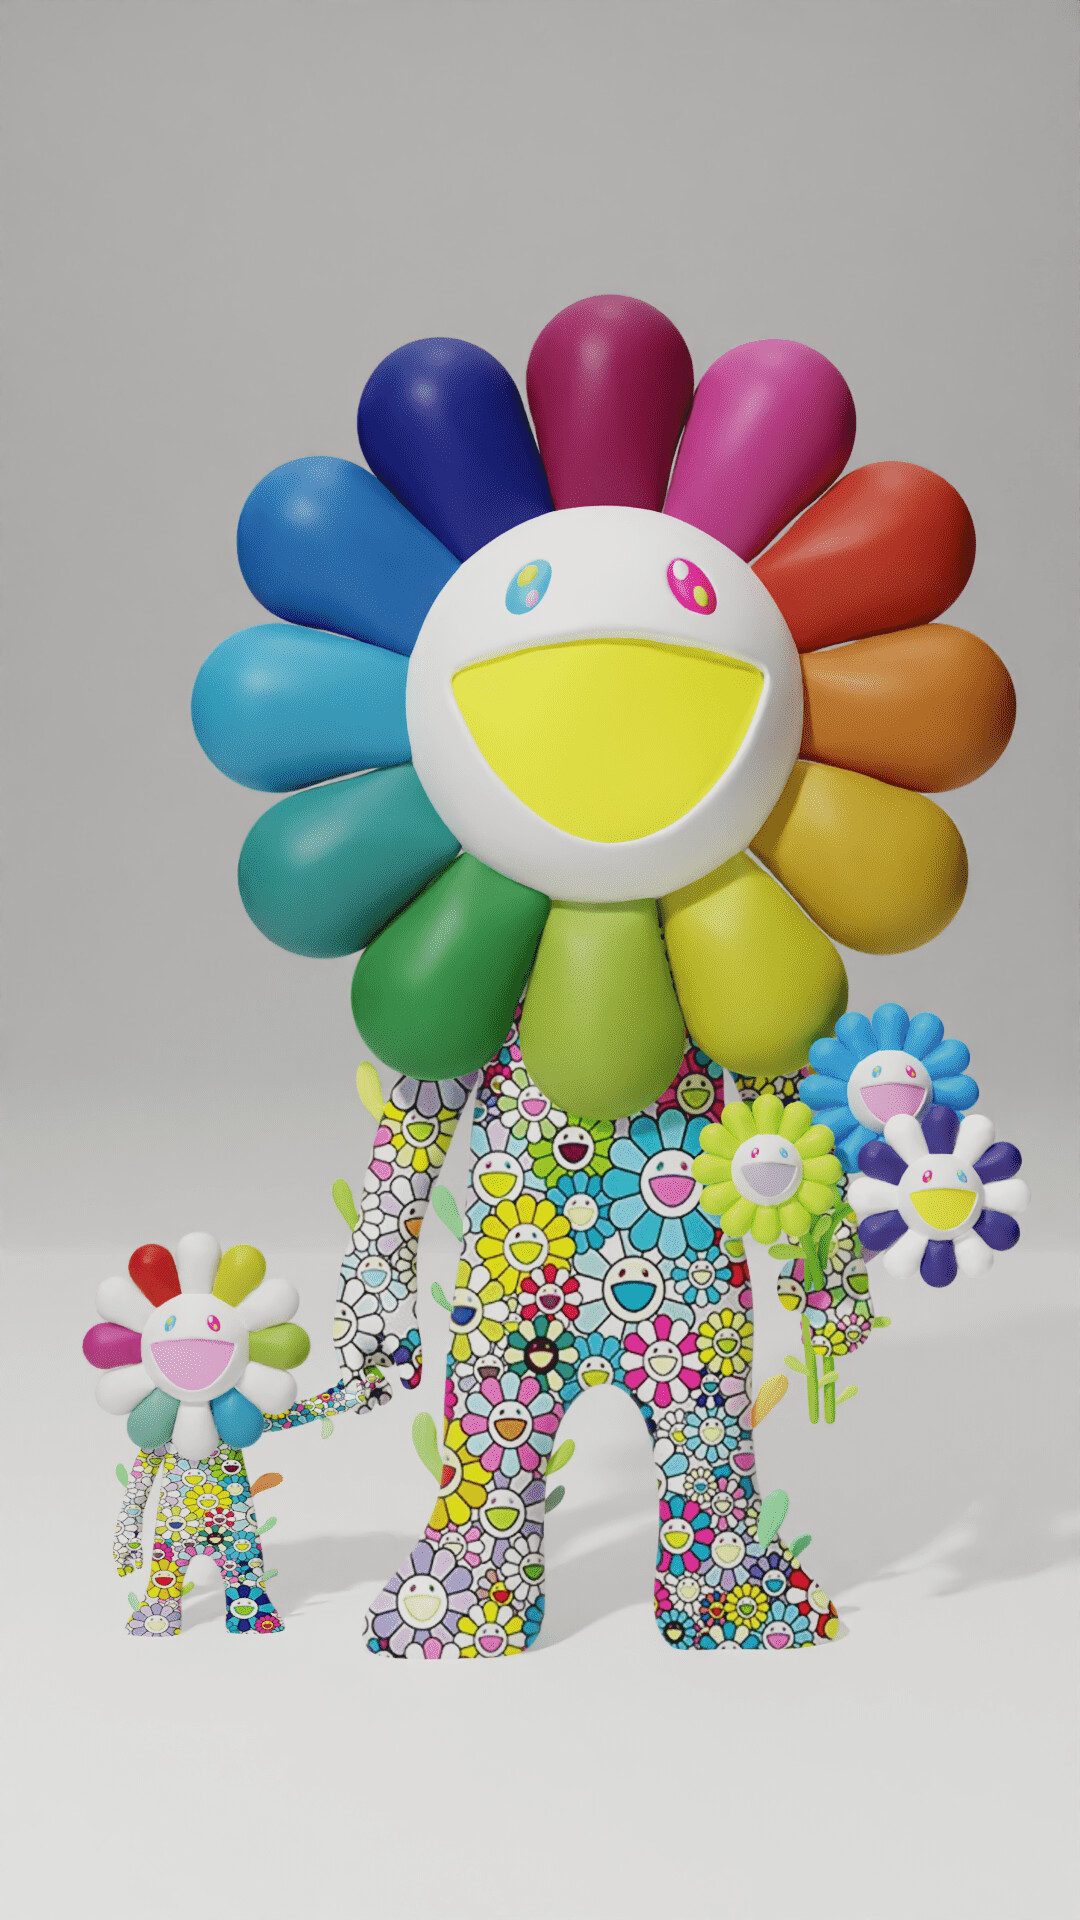 ArtStation - 3D TAKASHI MURAKAMI FLOWER